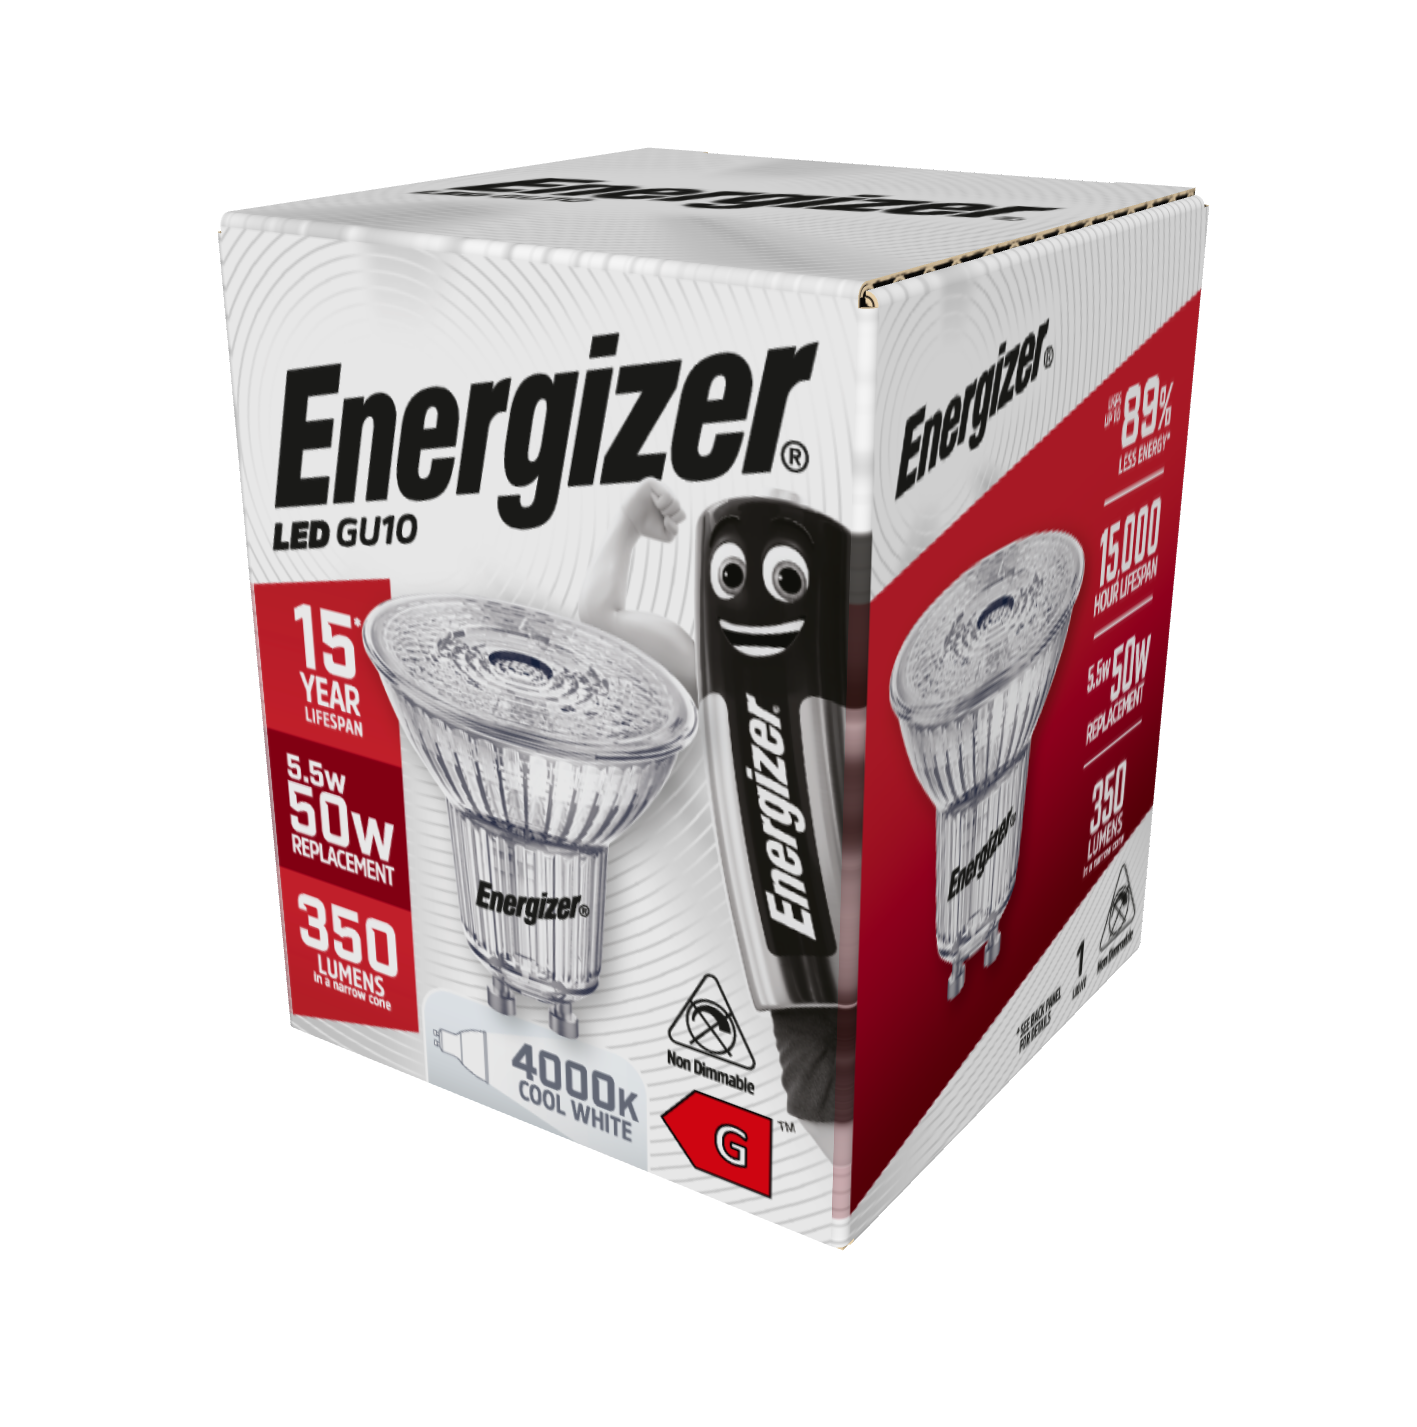 Energizer LED GU10 350 lm 5,5 W 4.000 K (kaltweiß) dimmbar, 1er-Packung